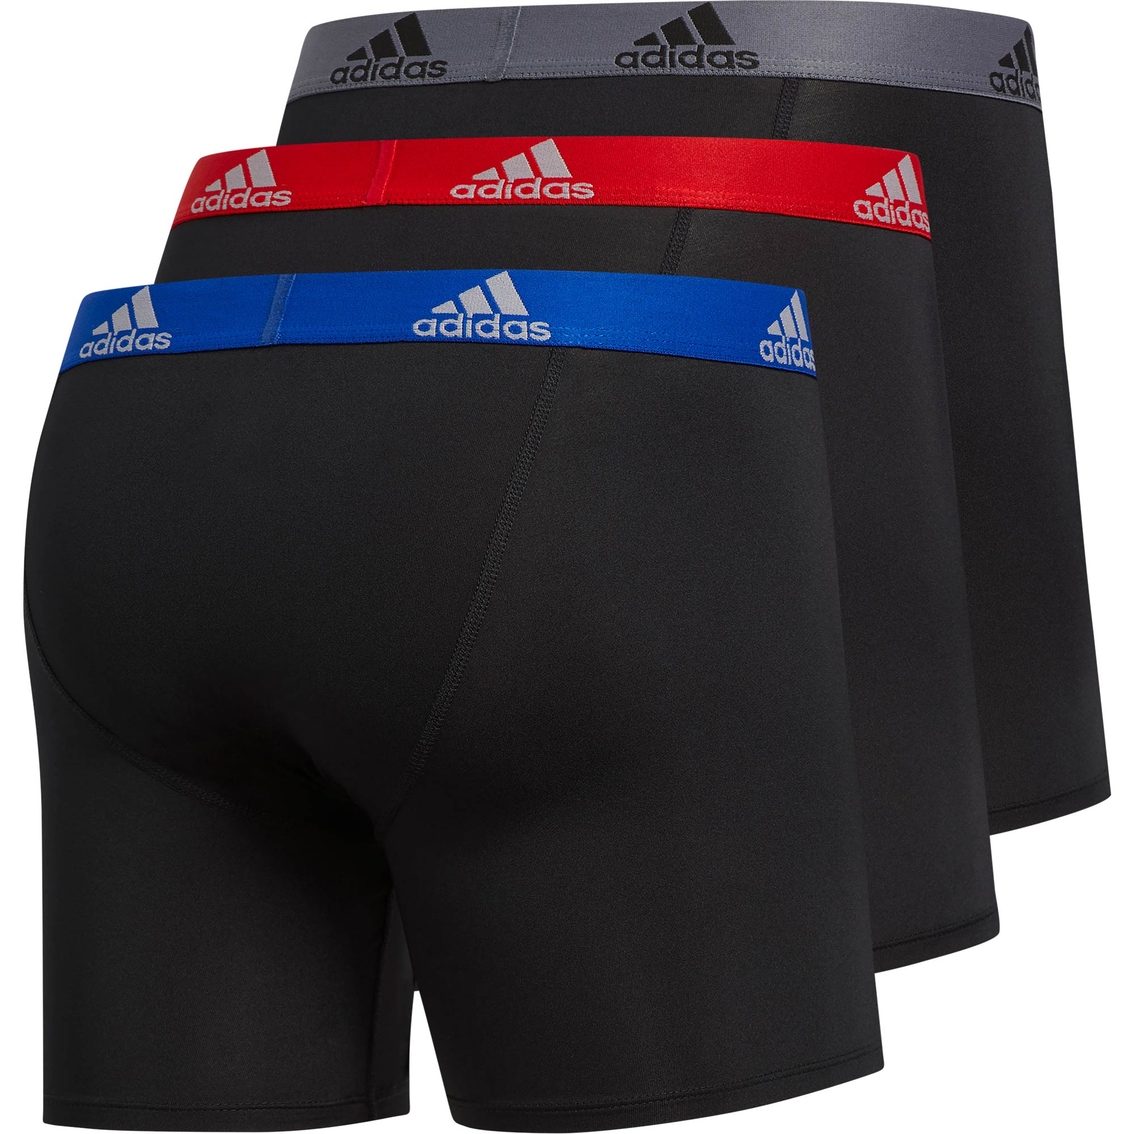 Adidas Performance Boxer Brief 3 Pk. | Underwear | Clothing ...